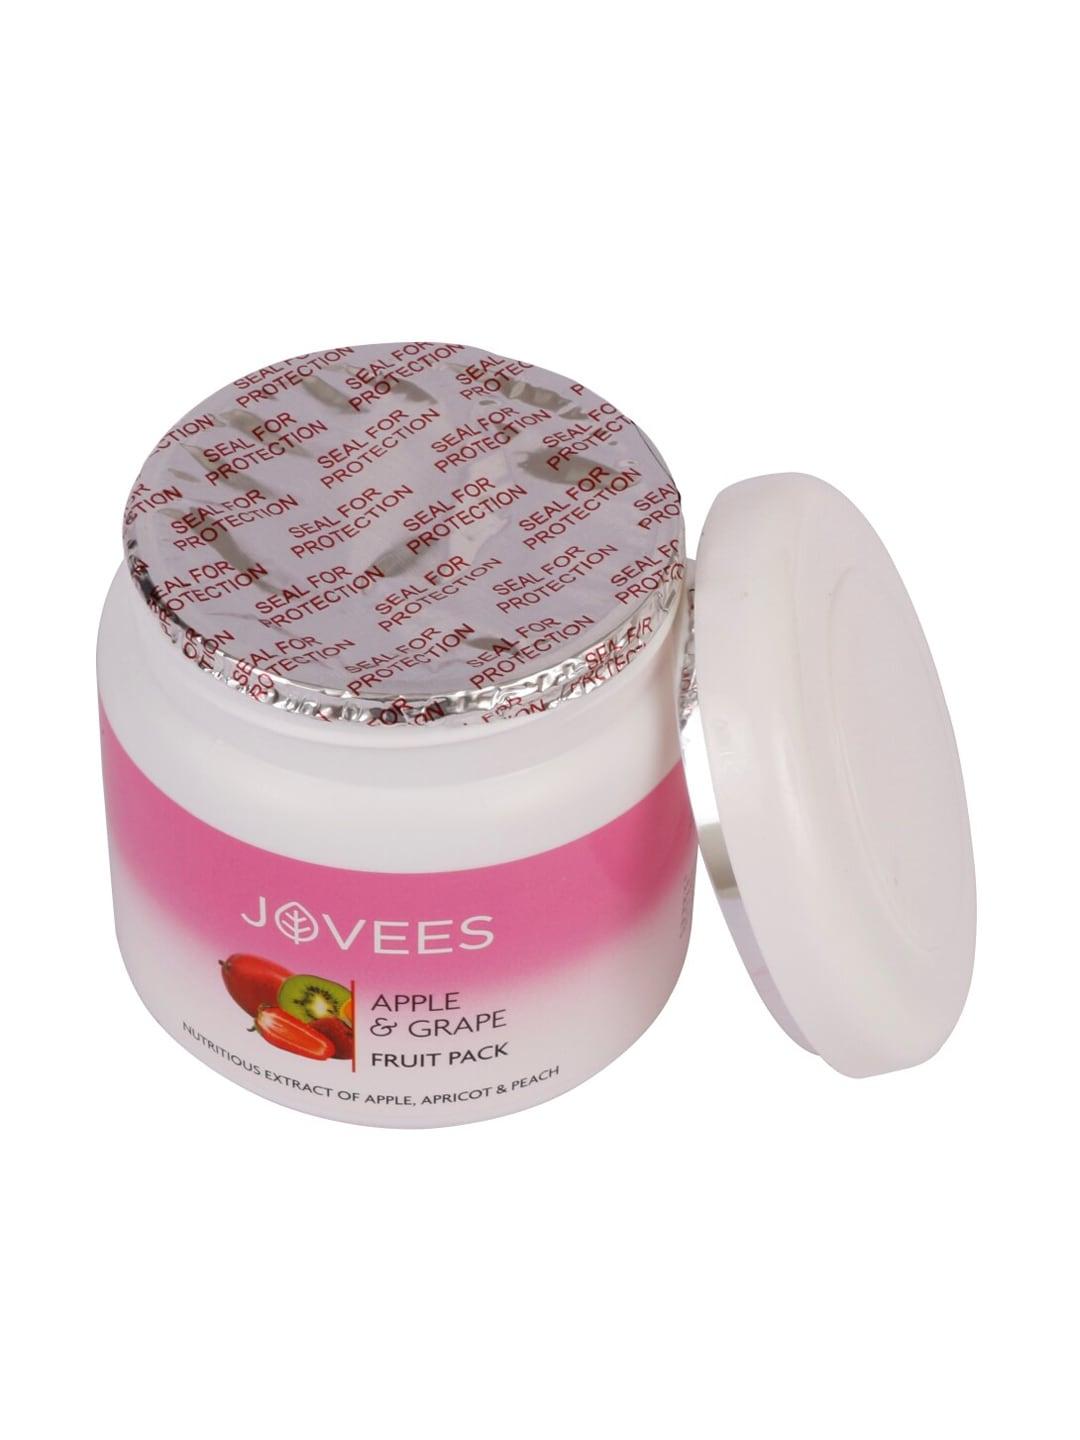 jovees apple & grape rejuvenating fruit face pack - 400 g